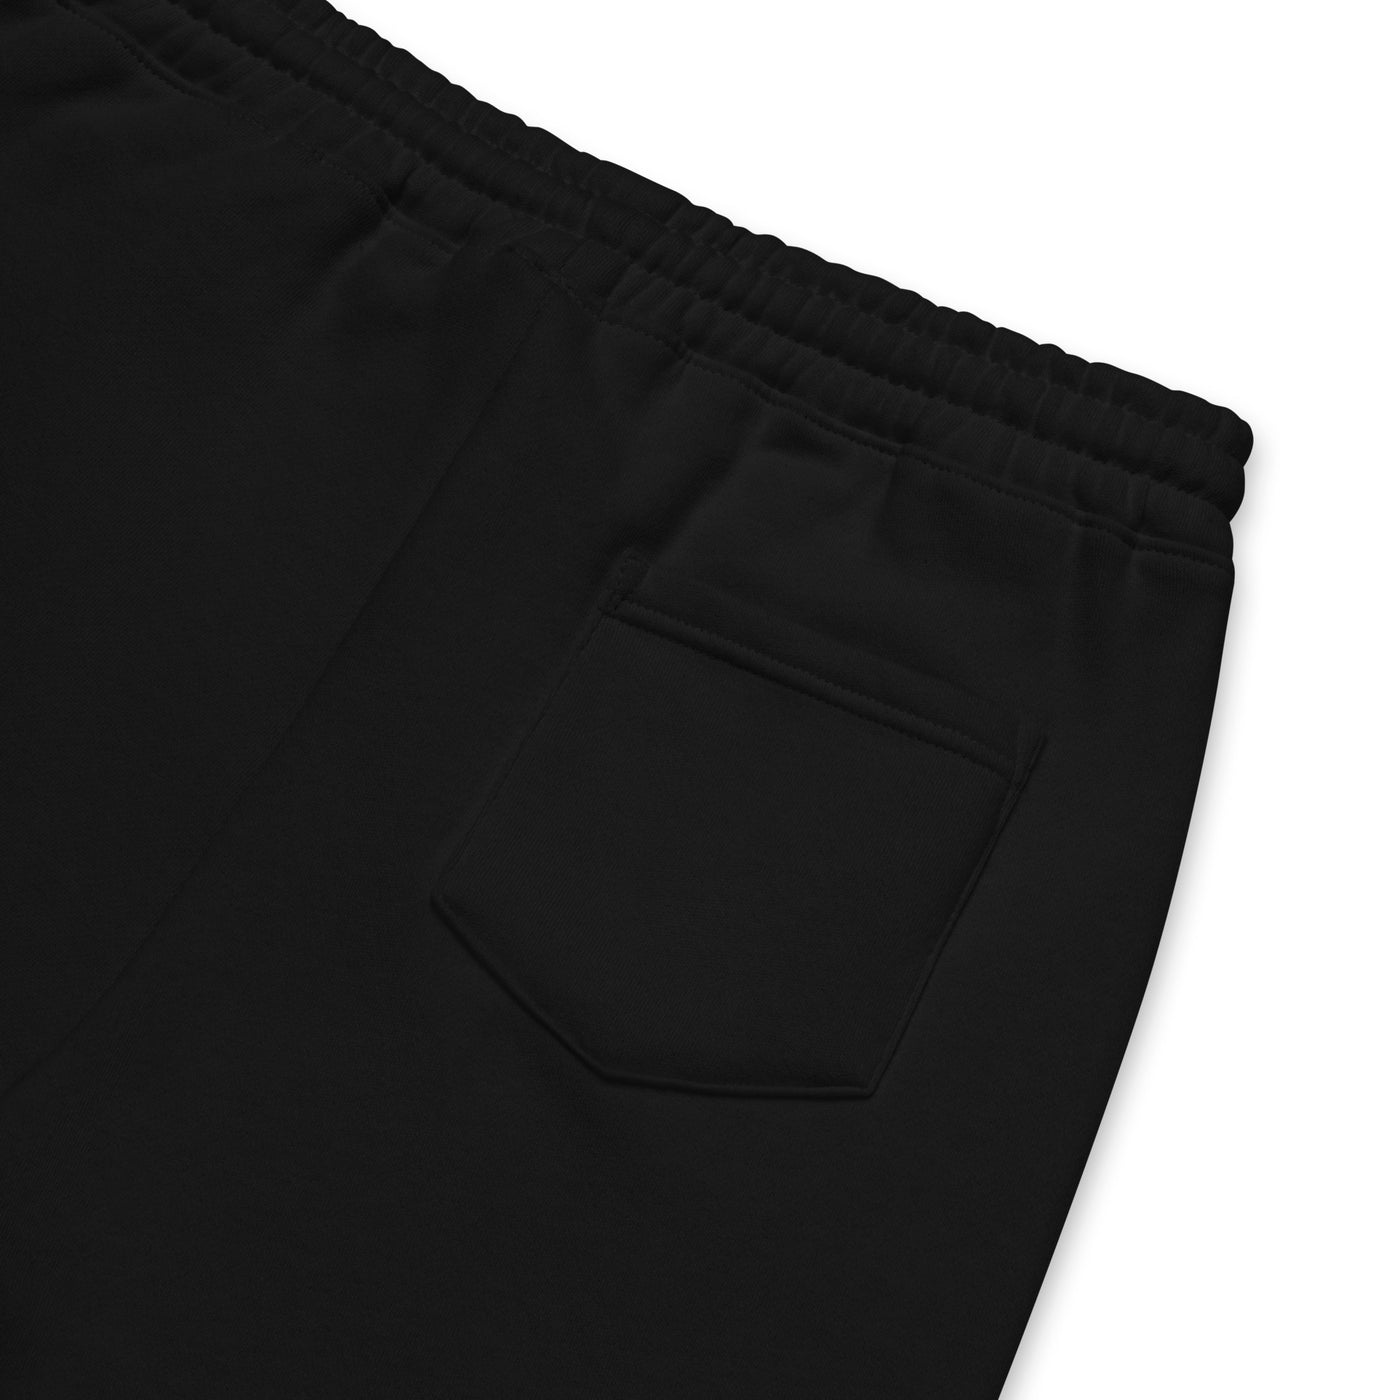  4iCe® Elite Boxing black embroidered shorts details